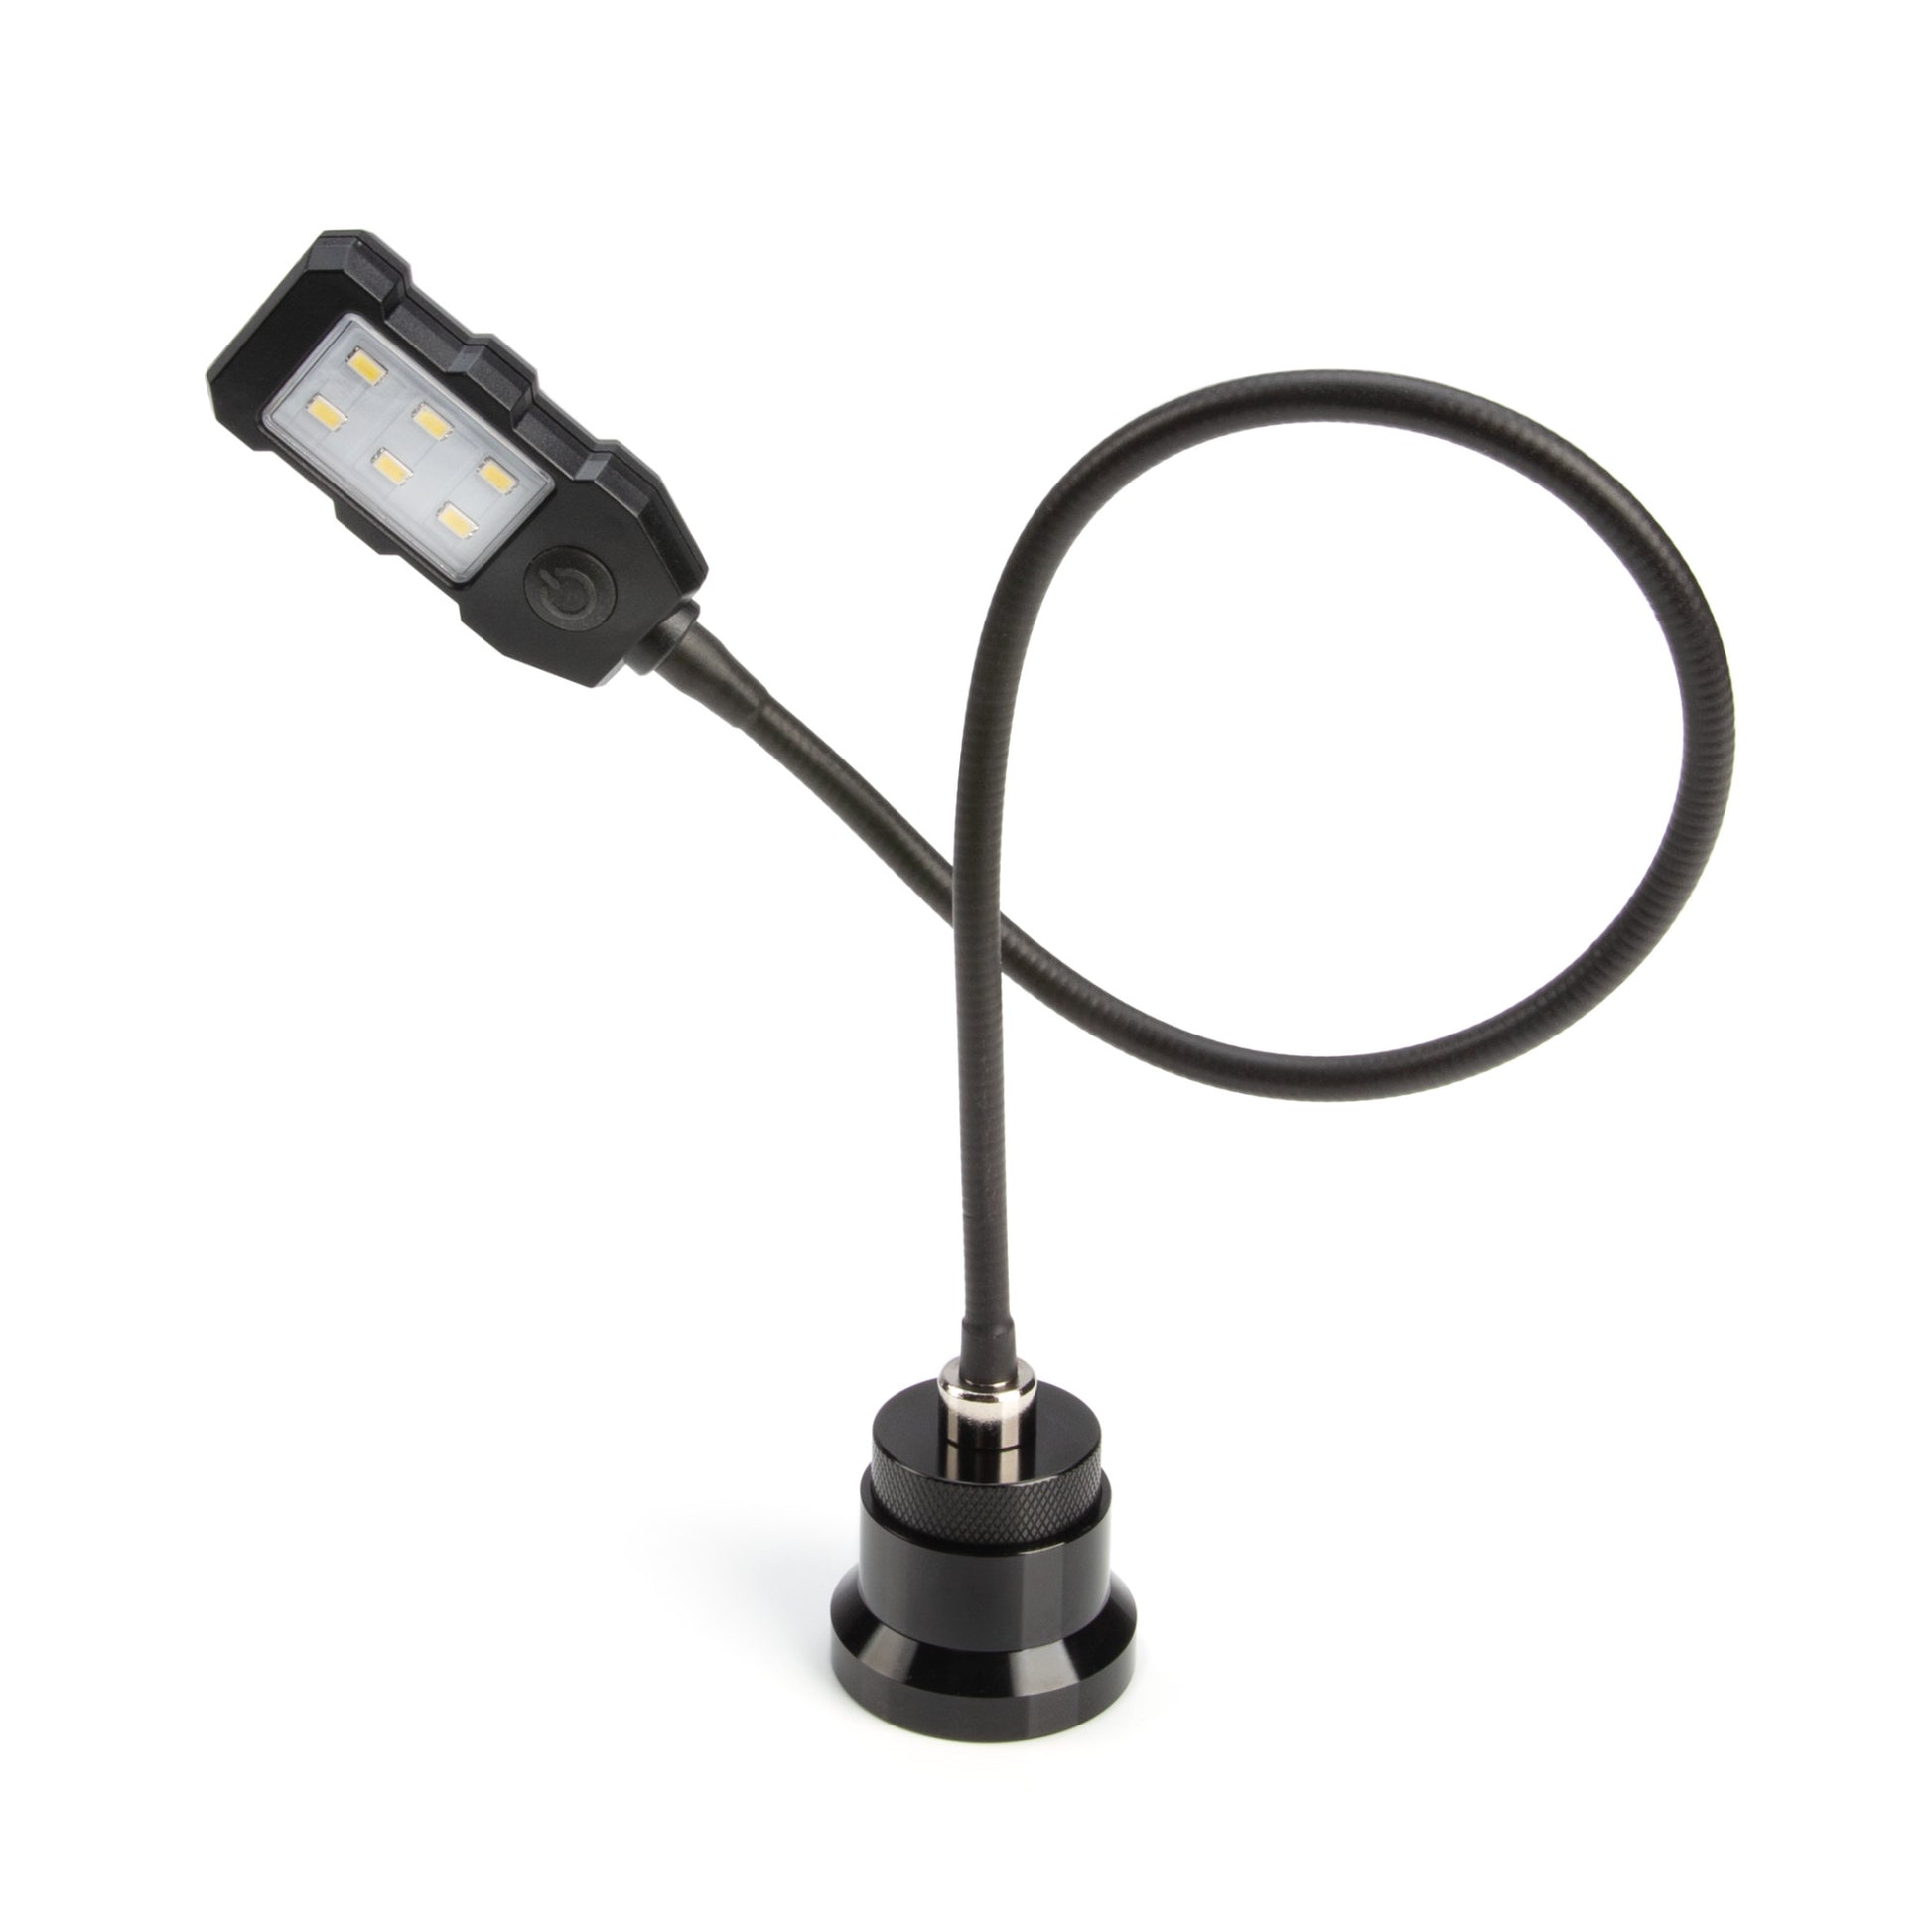 Lampe magnétique rechargeable – Fit Super-Humain